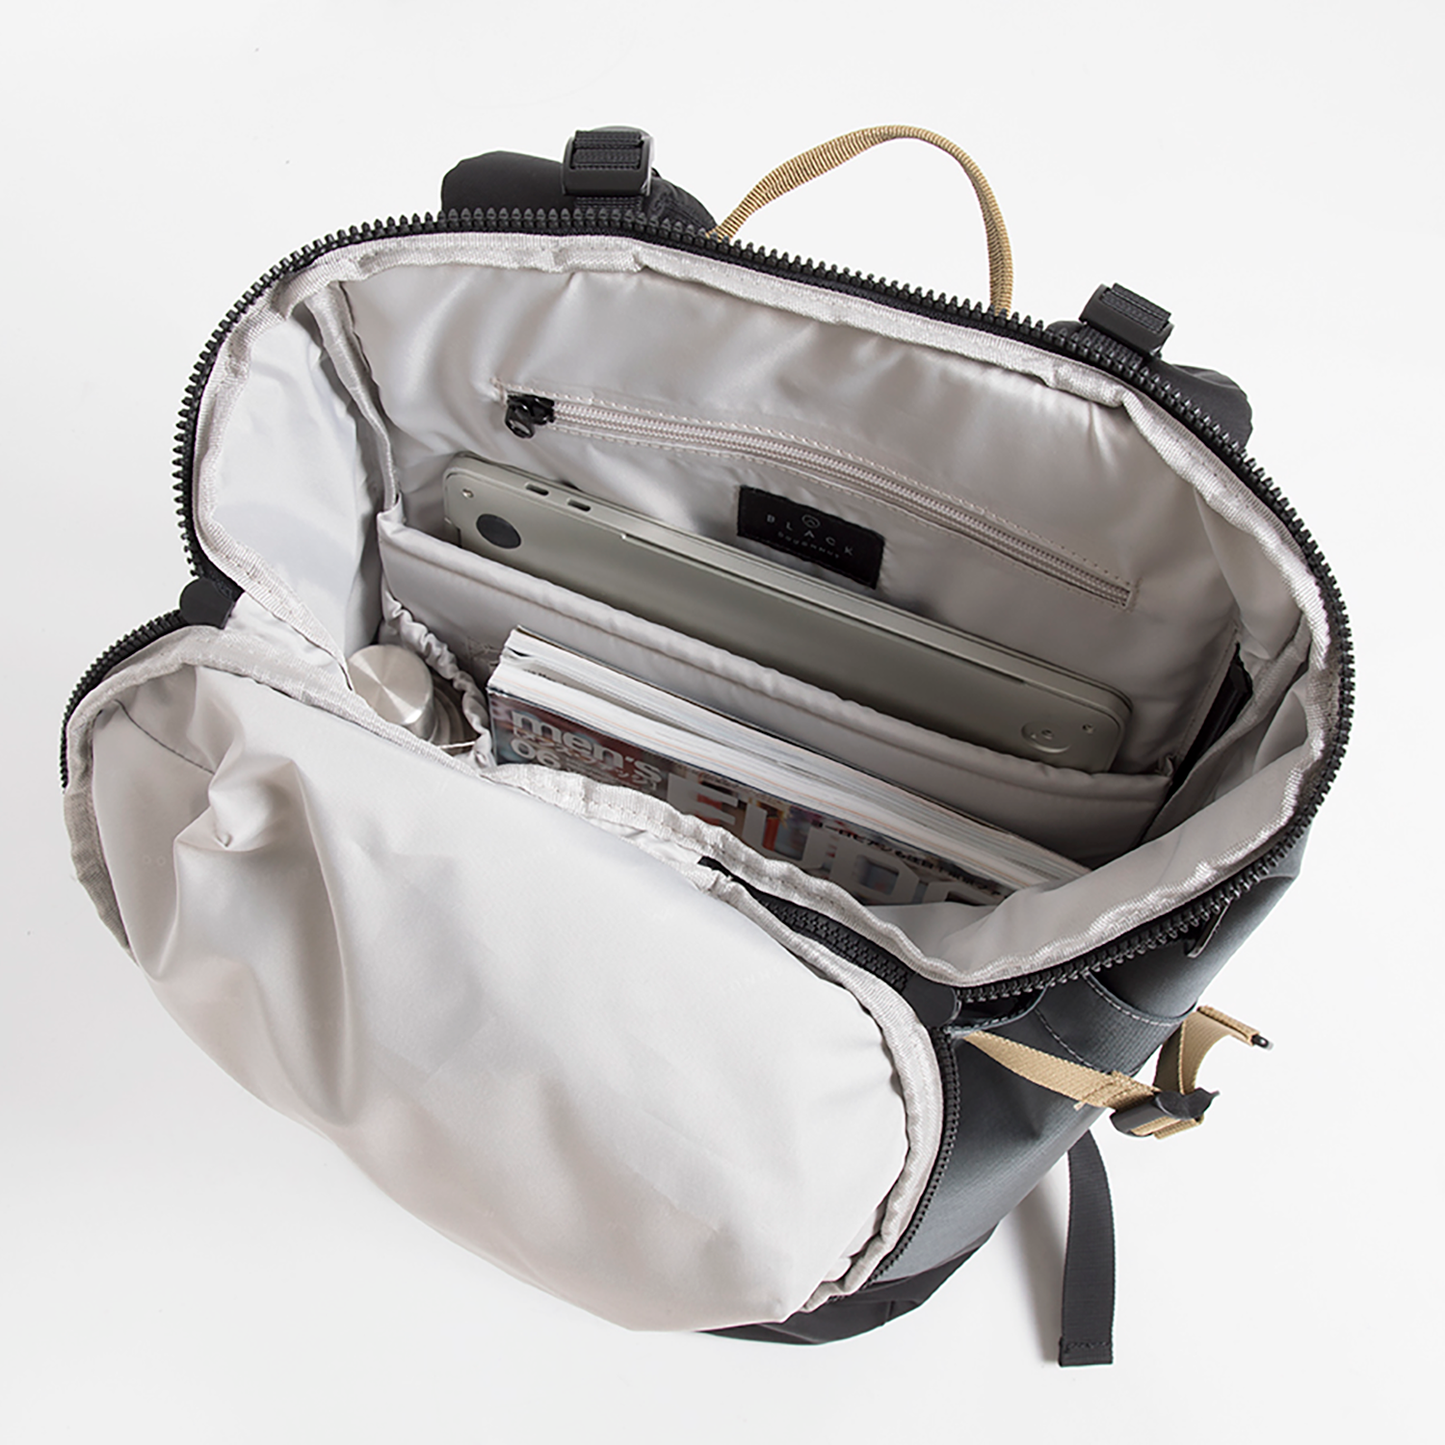 Dynamic Large Shield Series Black Backpack